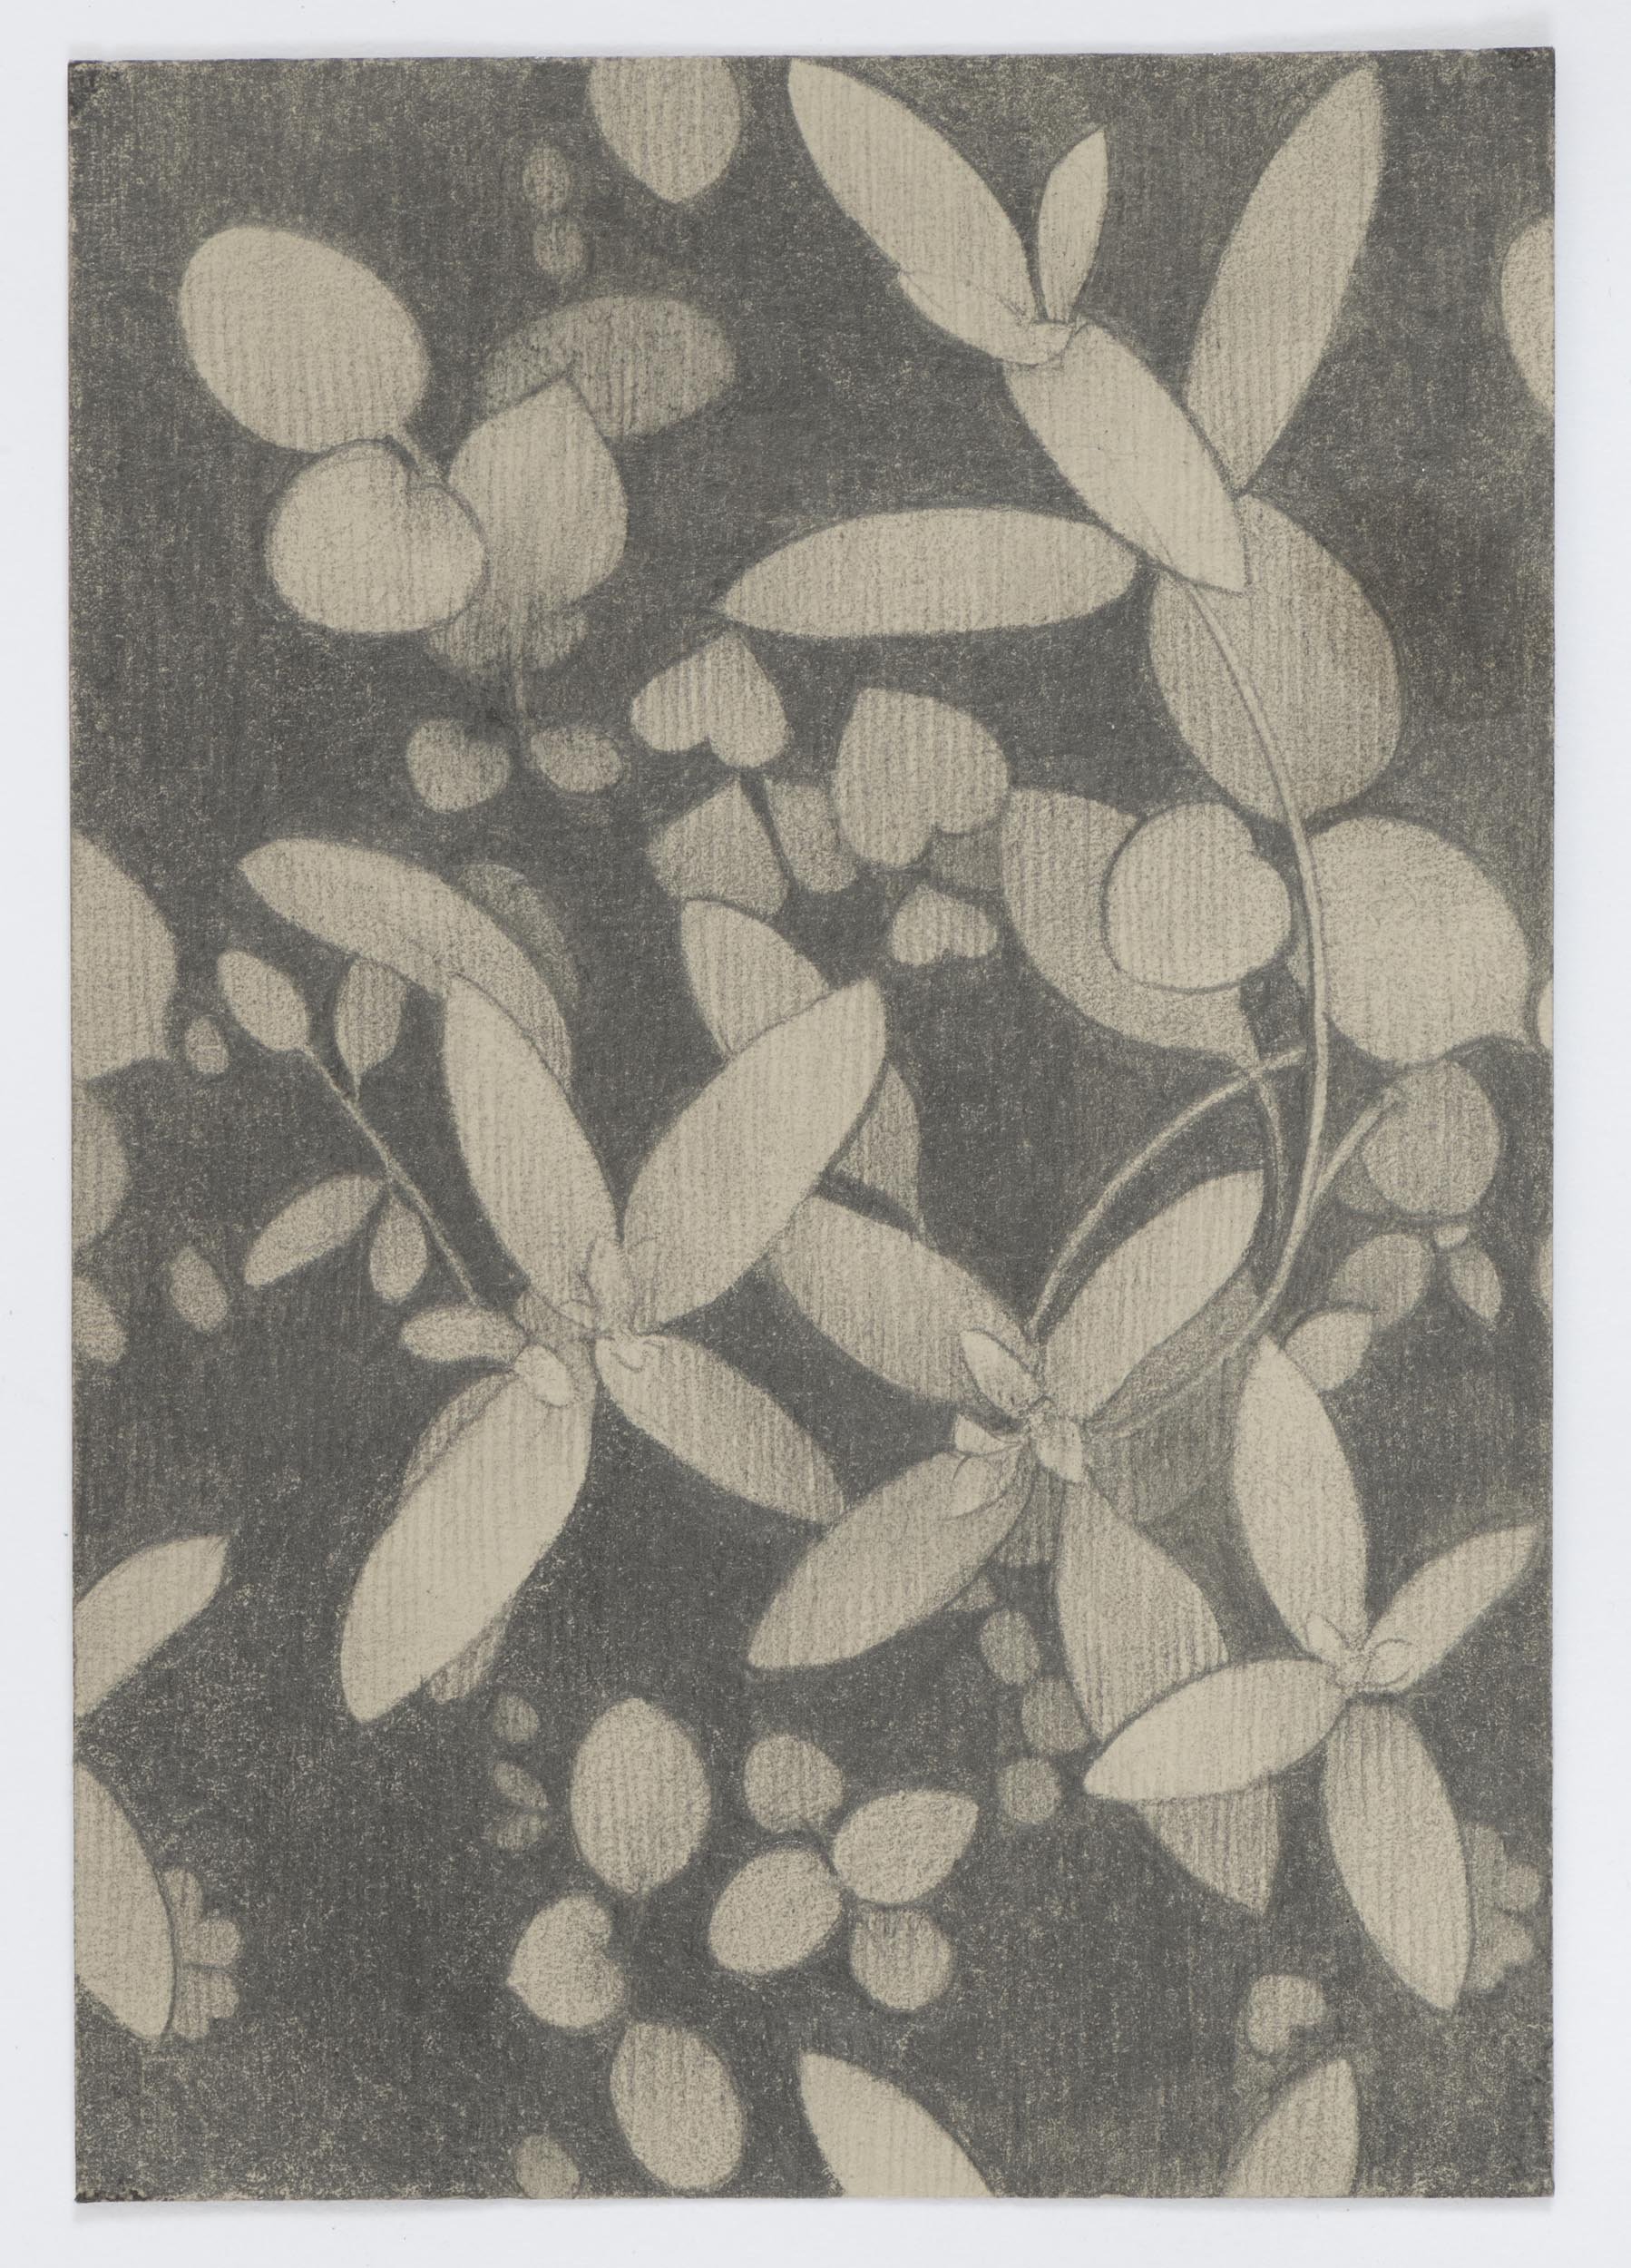  Leaf Structure 6, 2017 graphite on paper 5⅛ x 3½ in. &nbsp; 13.02 x 8.89 cm. 